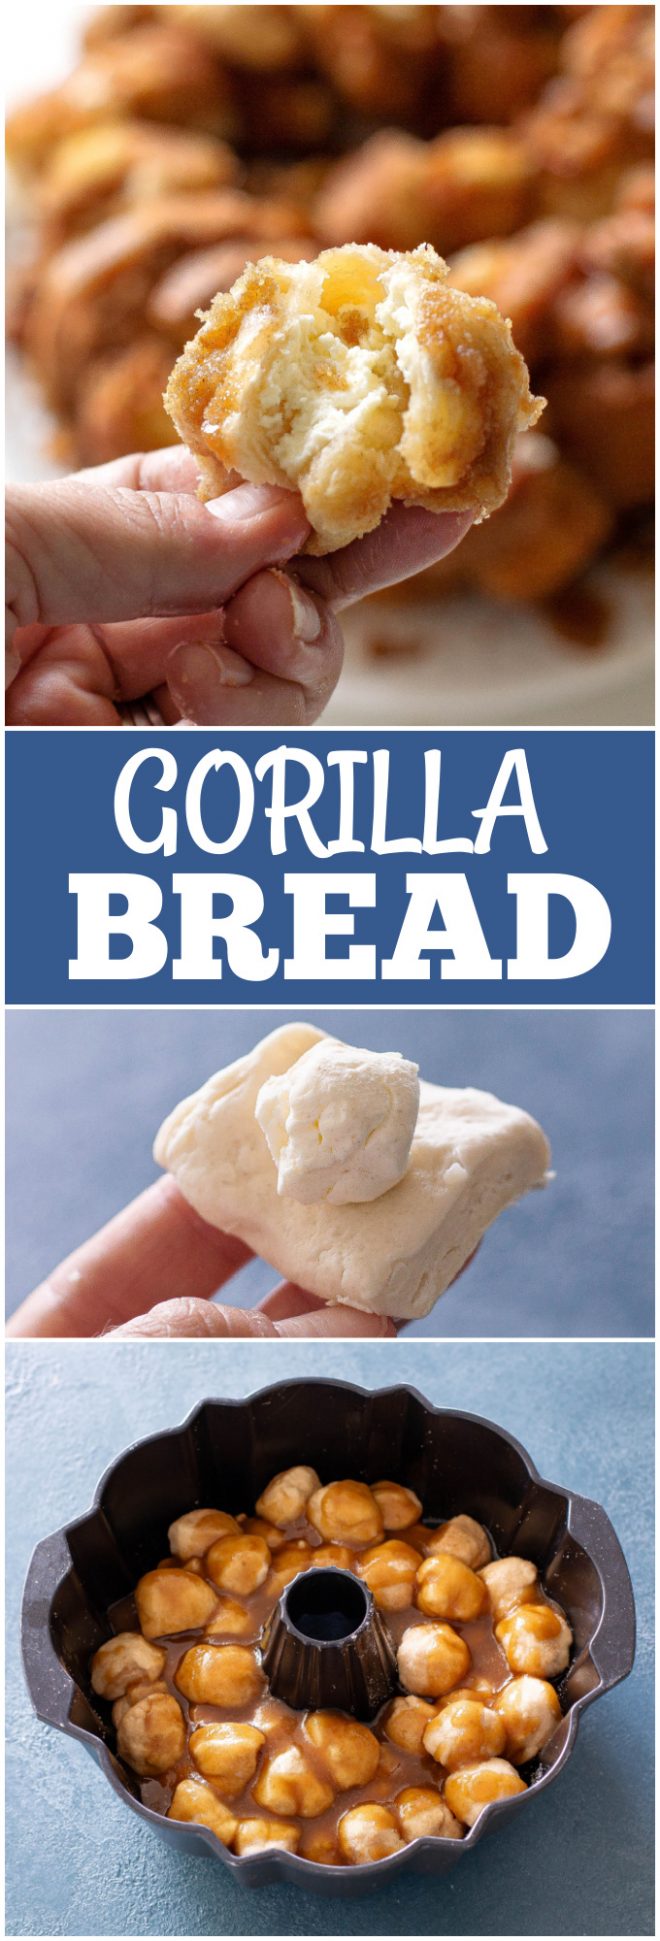 fb image - Gorilla Bread